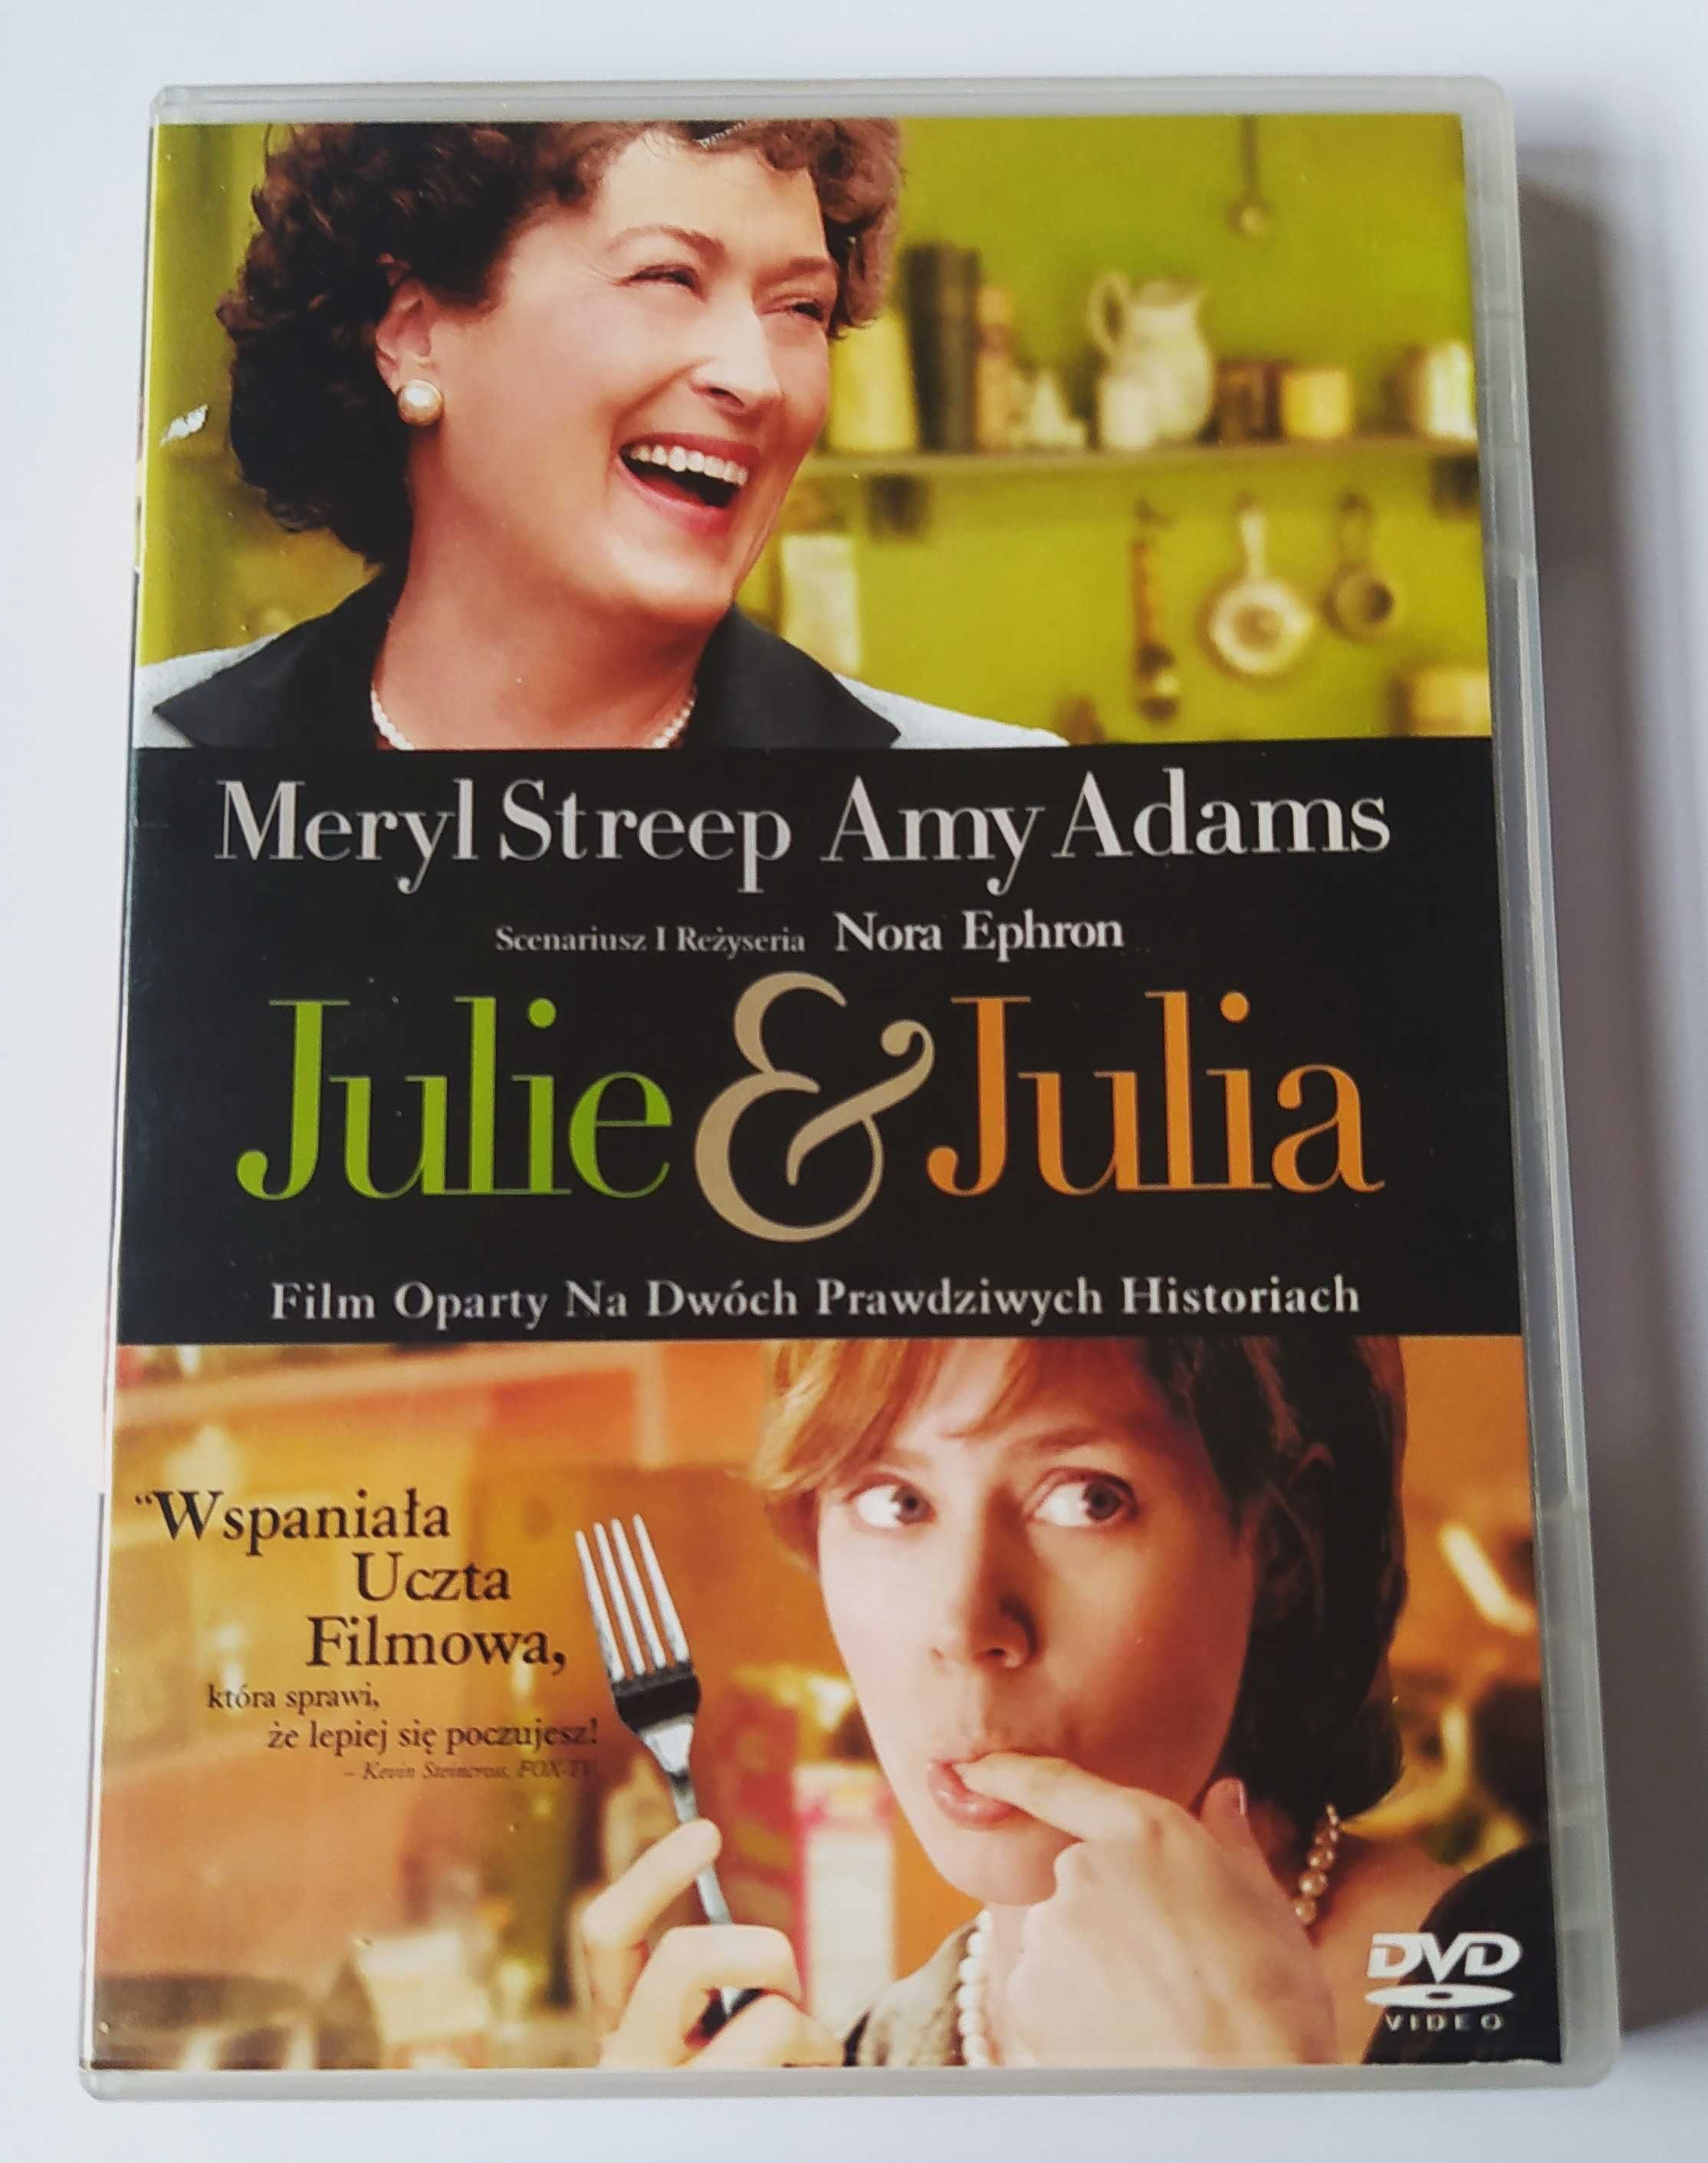 Julia&Julia DVD Meryl Streep Amy Adams